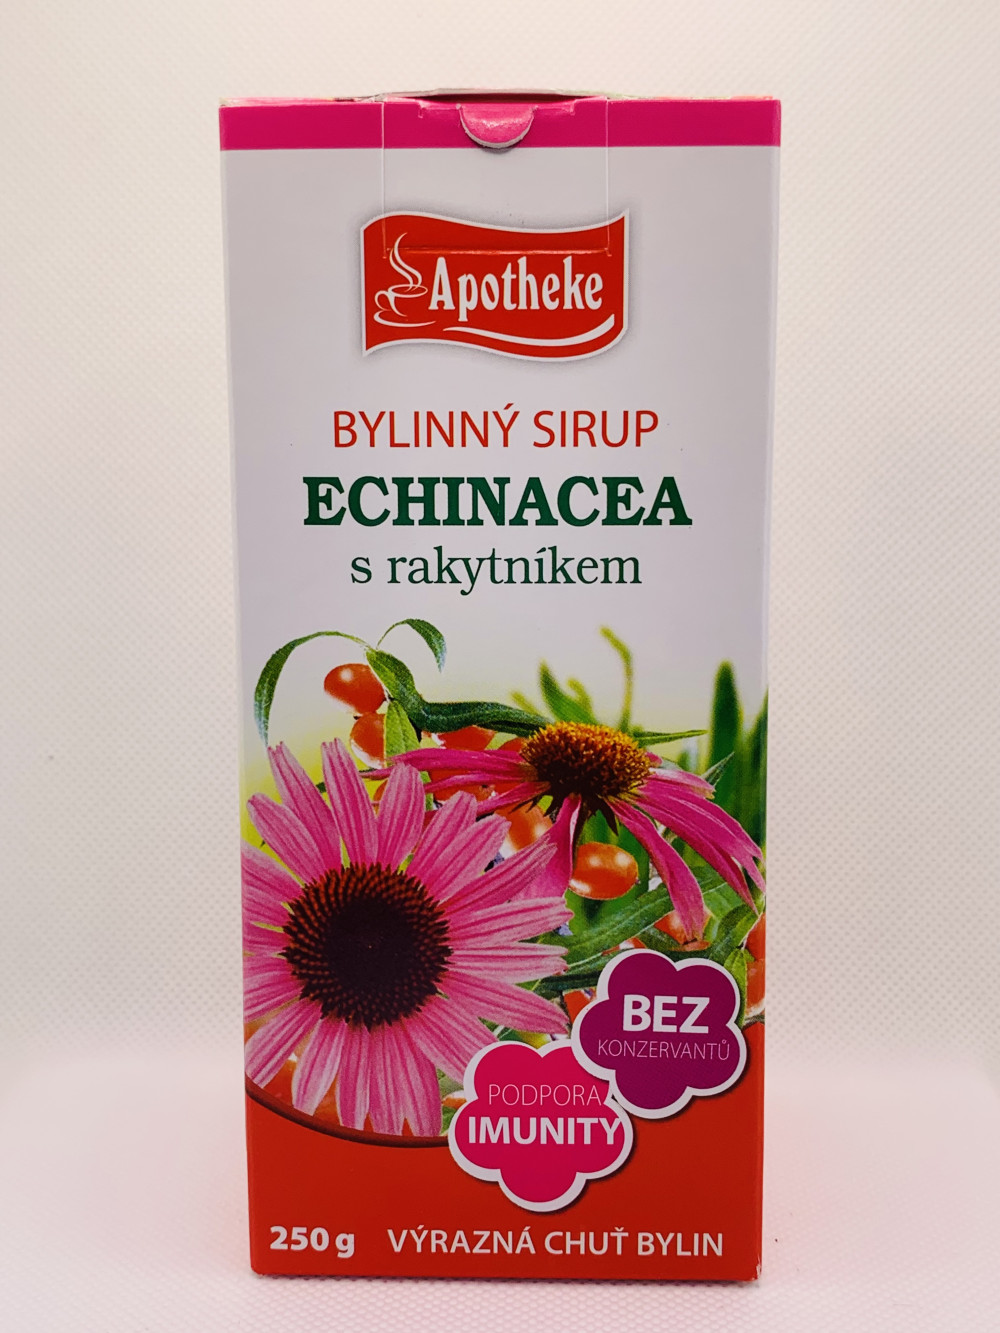 Apotheke Echinacea szirup homoktövissel - 250g